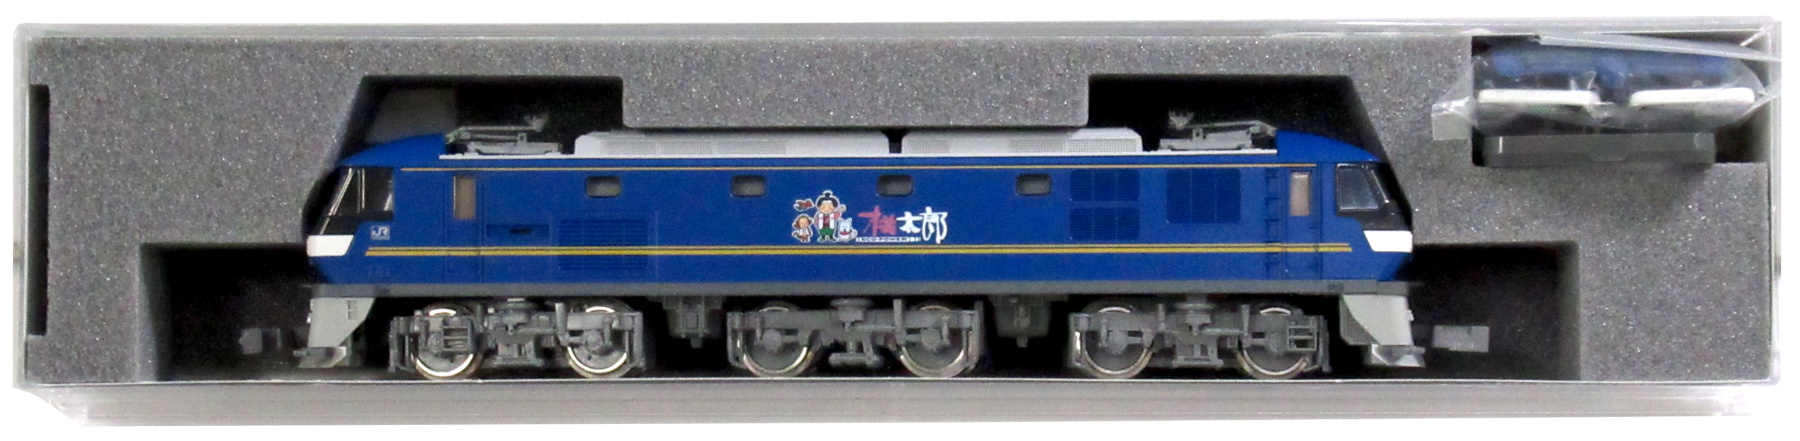 KATO Nゲージ EF210 3092-1 電気機関車 青 300 鉄道模型